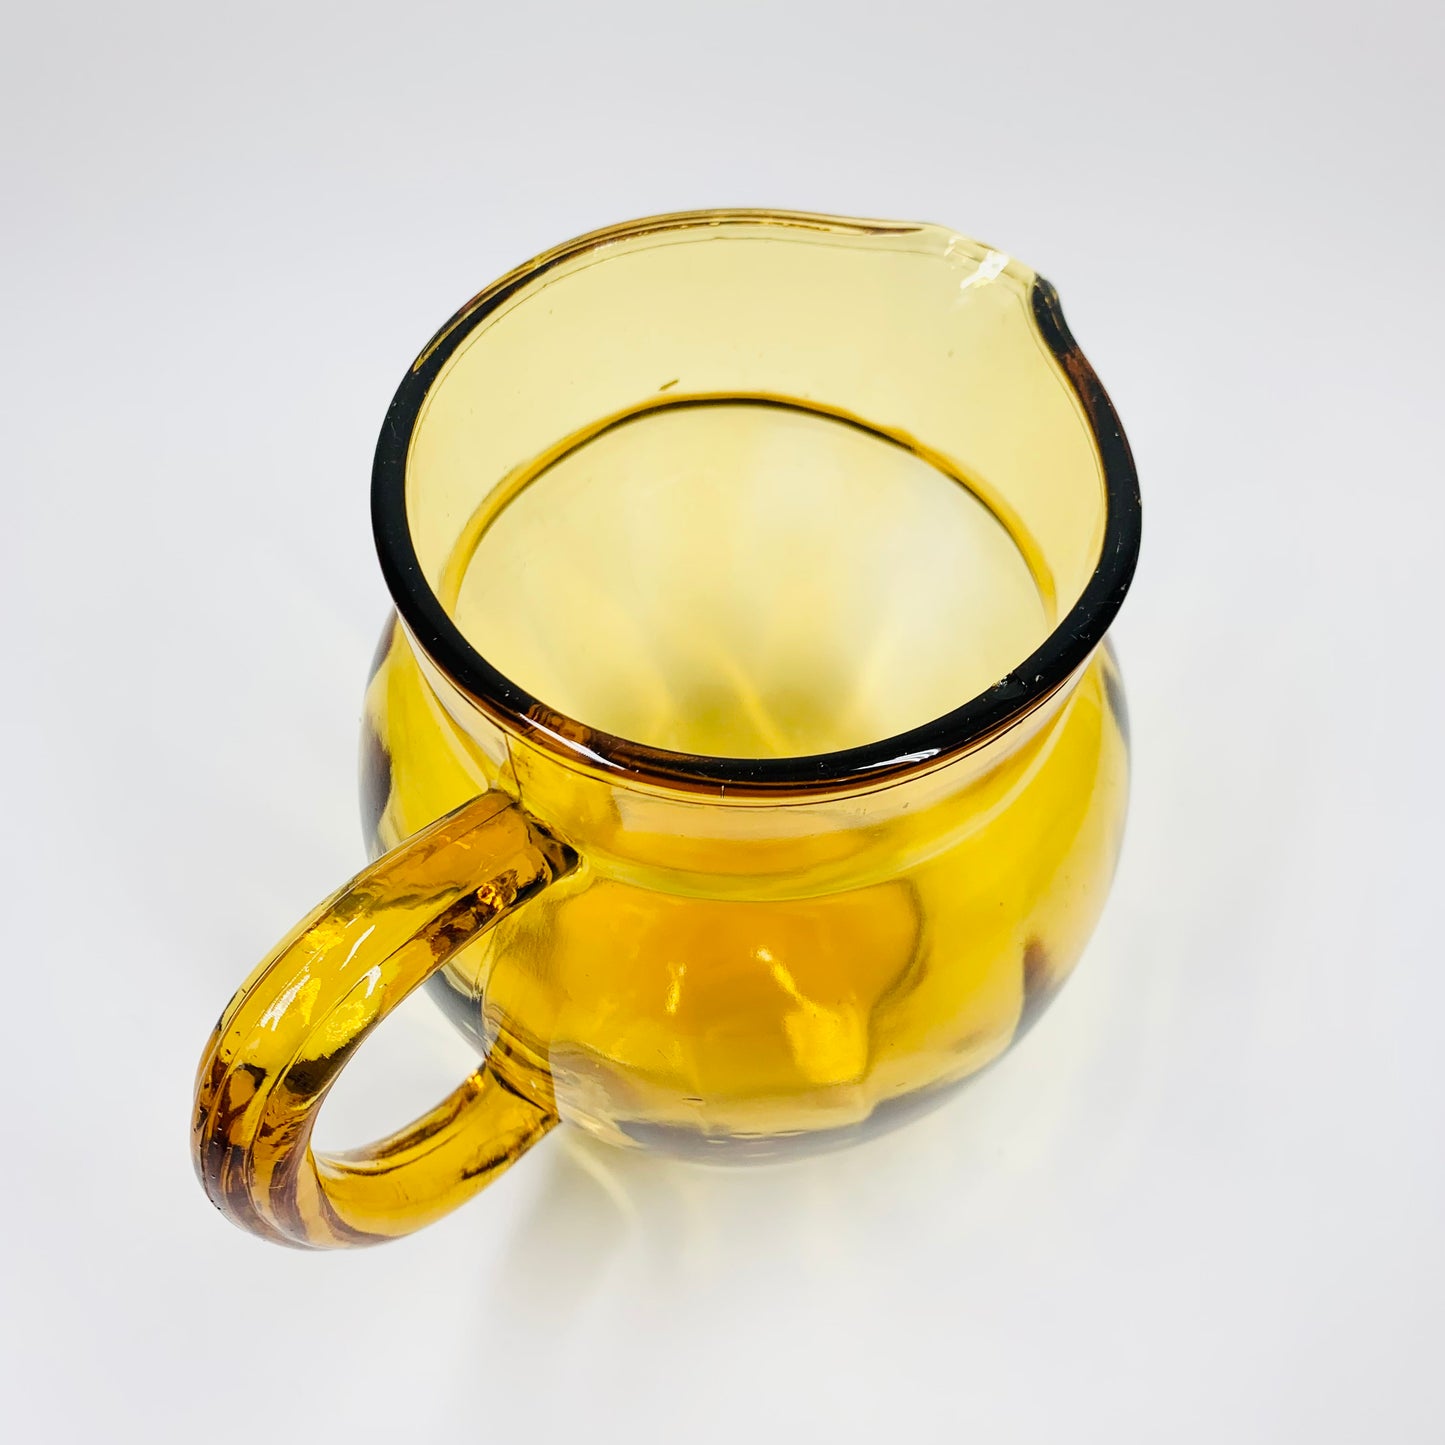 Art Deco amber glass jug